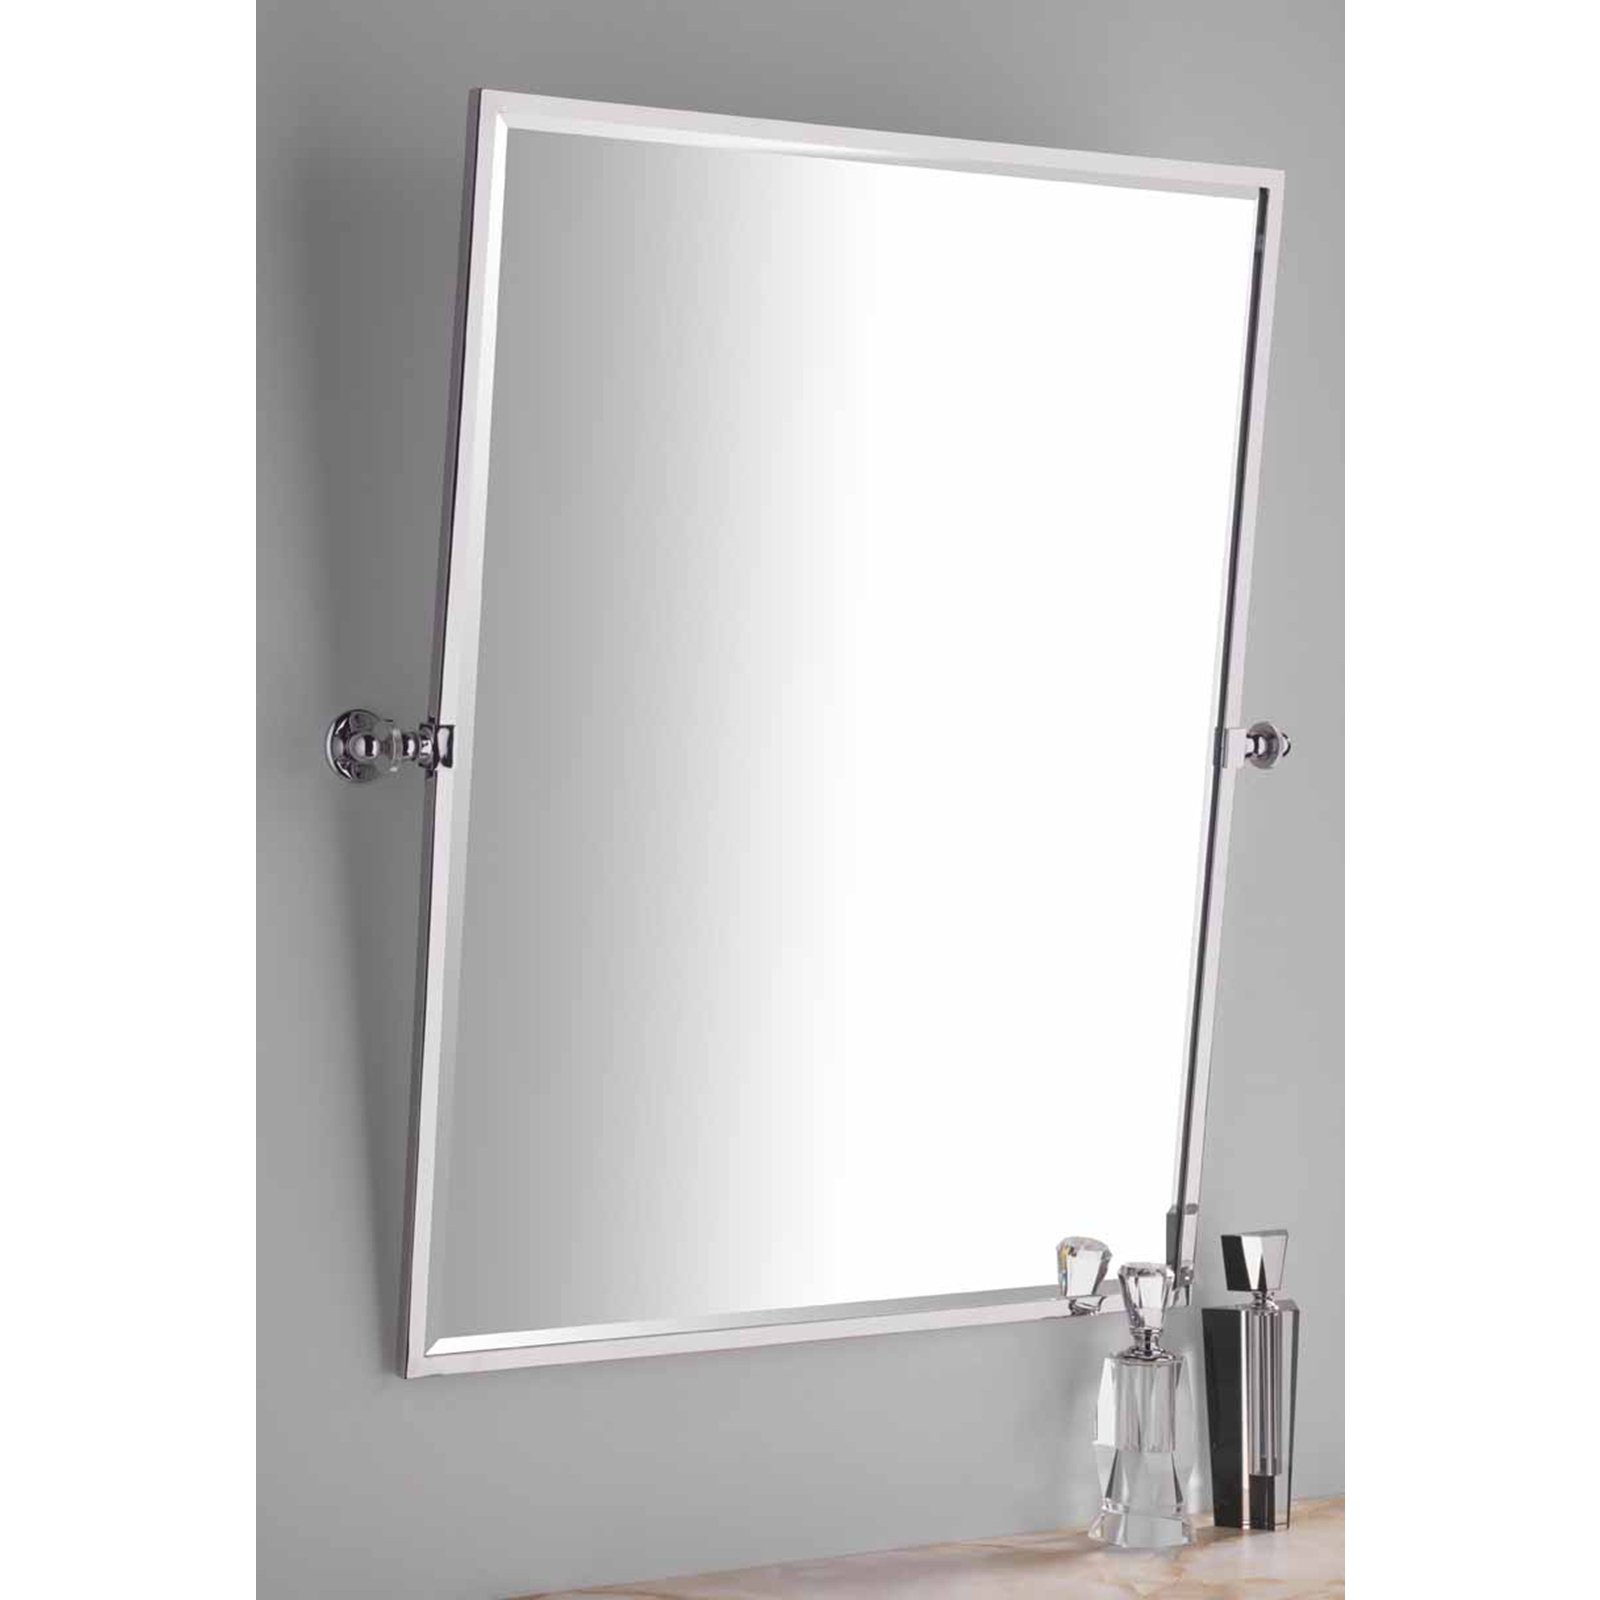 Tilting Bathroom Mirror
 Bathroom Rectangular tilting Mirror